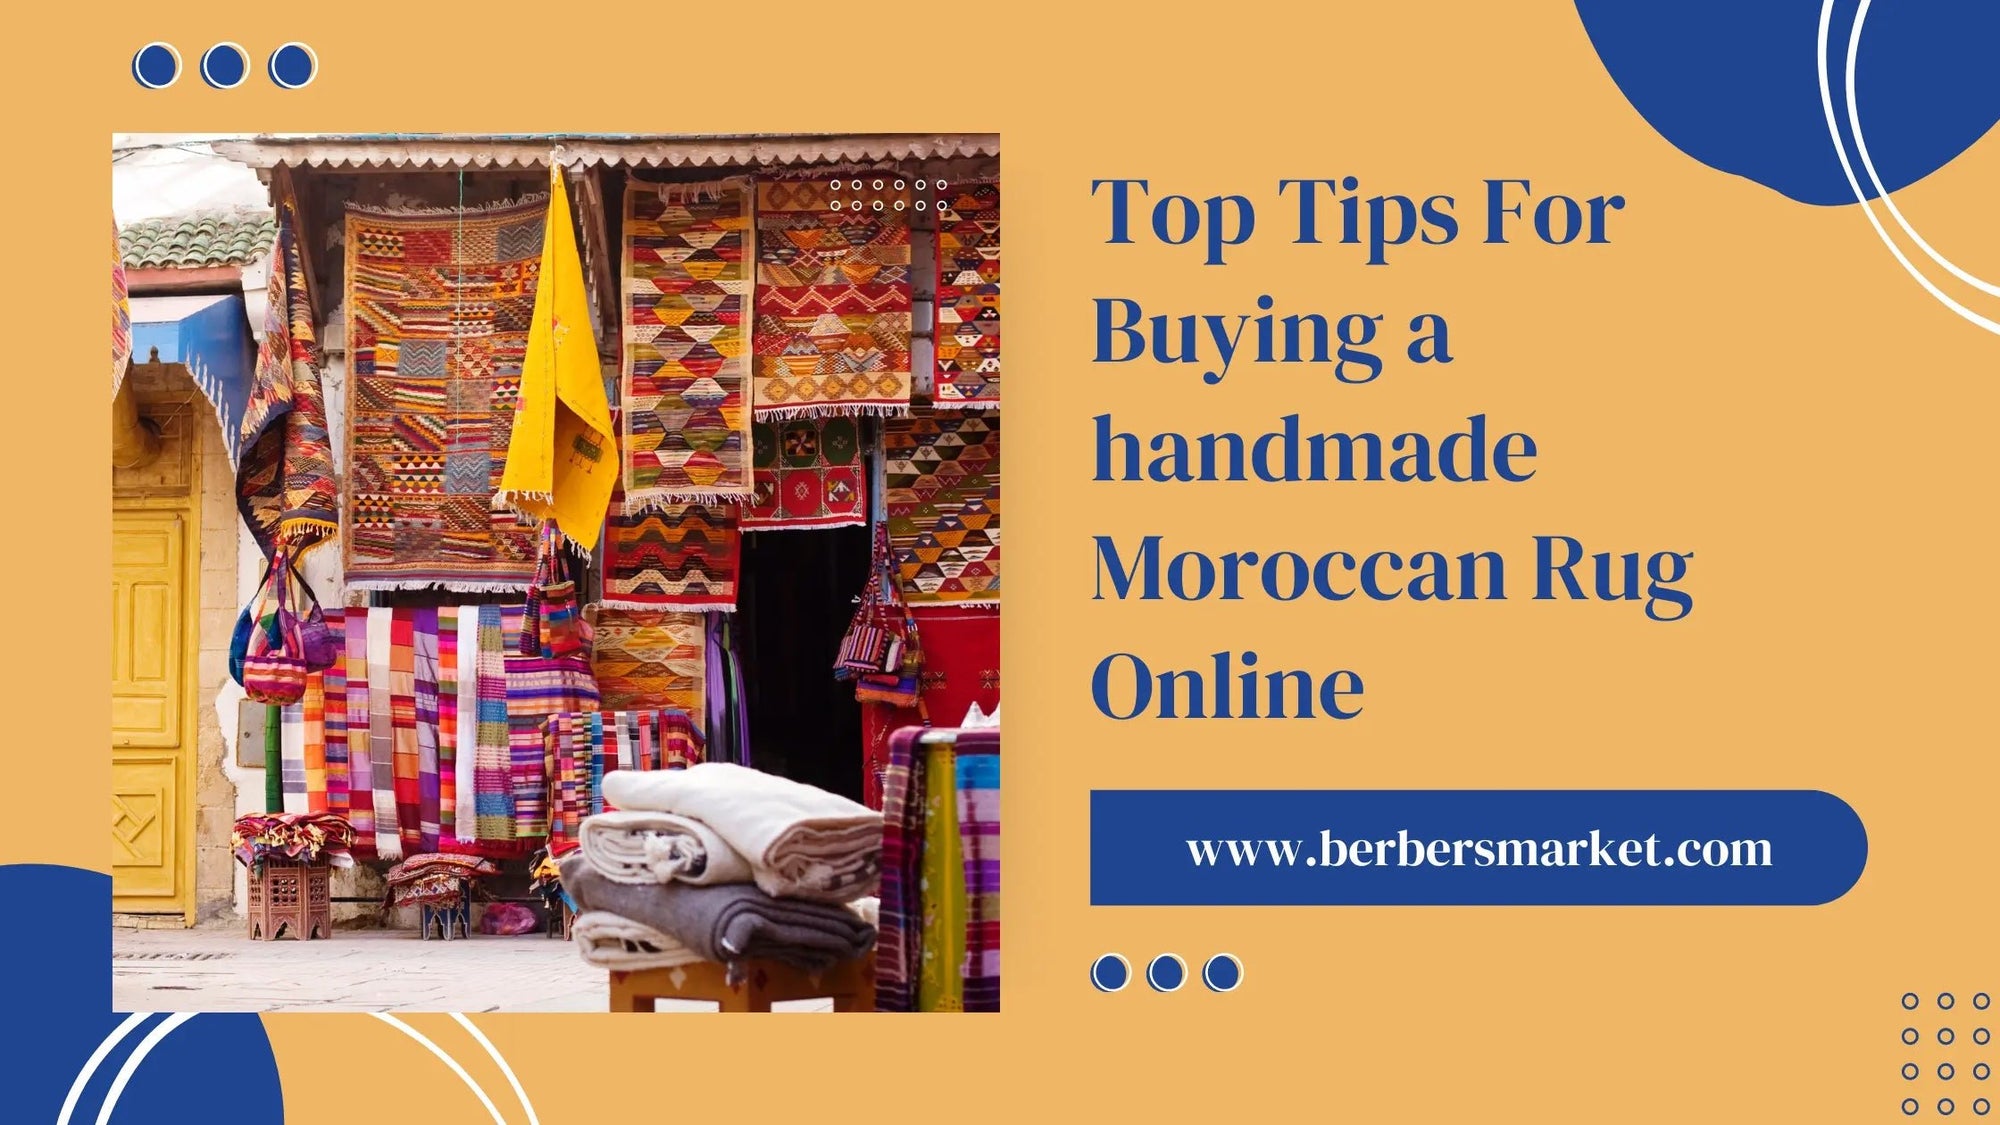 Handmade Moroccan rugs encyclopedia blog posts banner for desktop